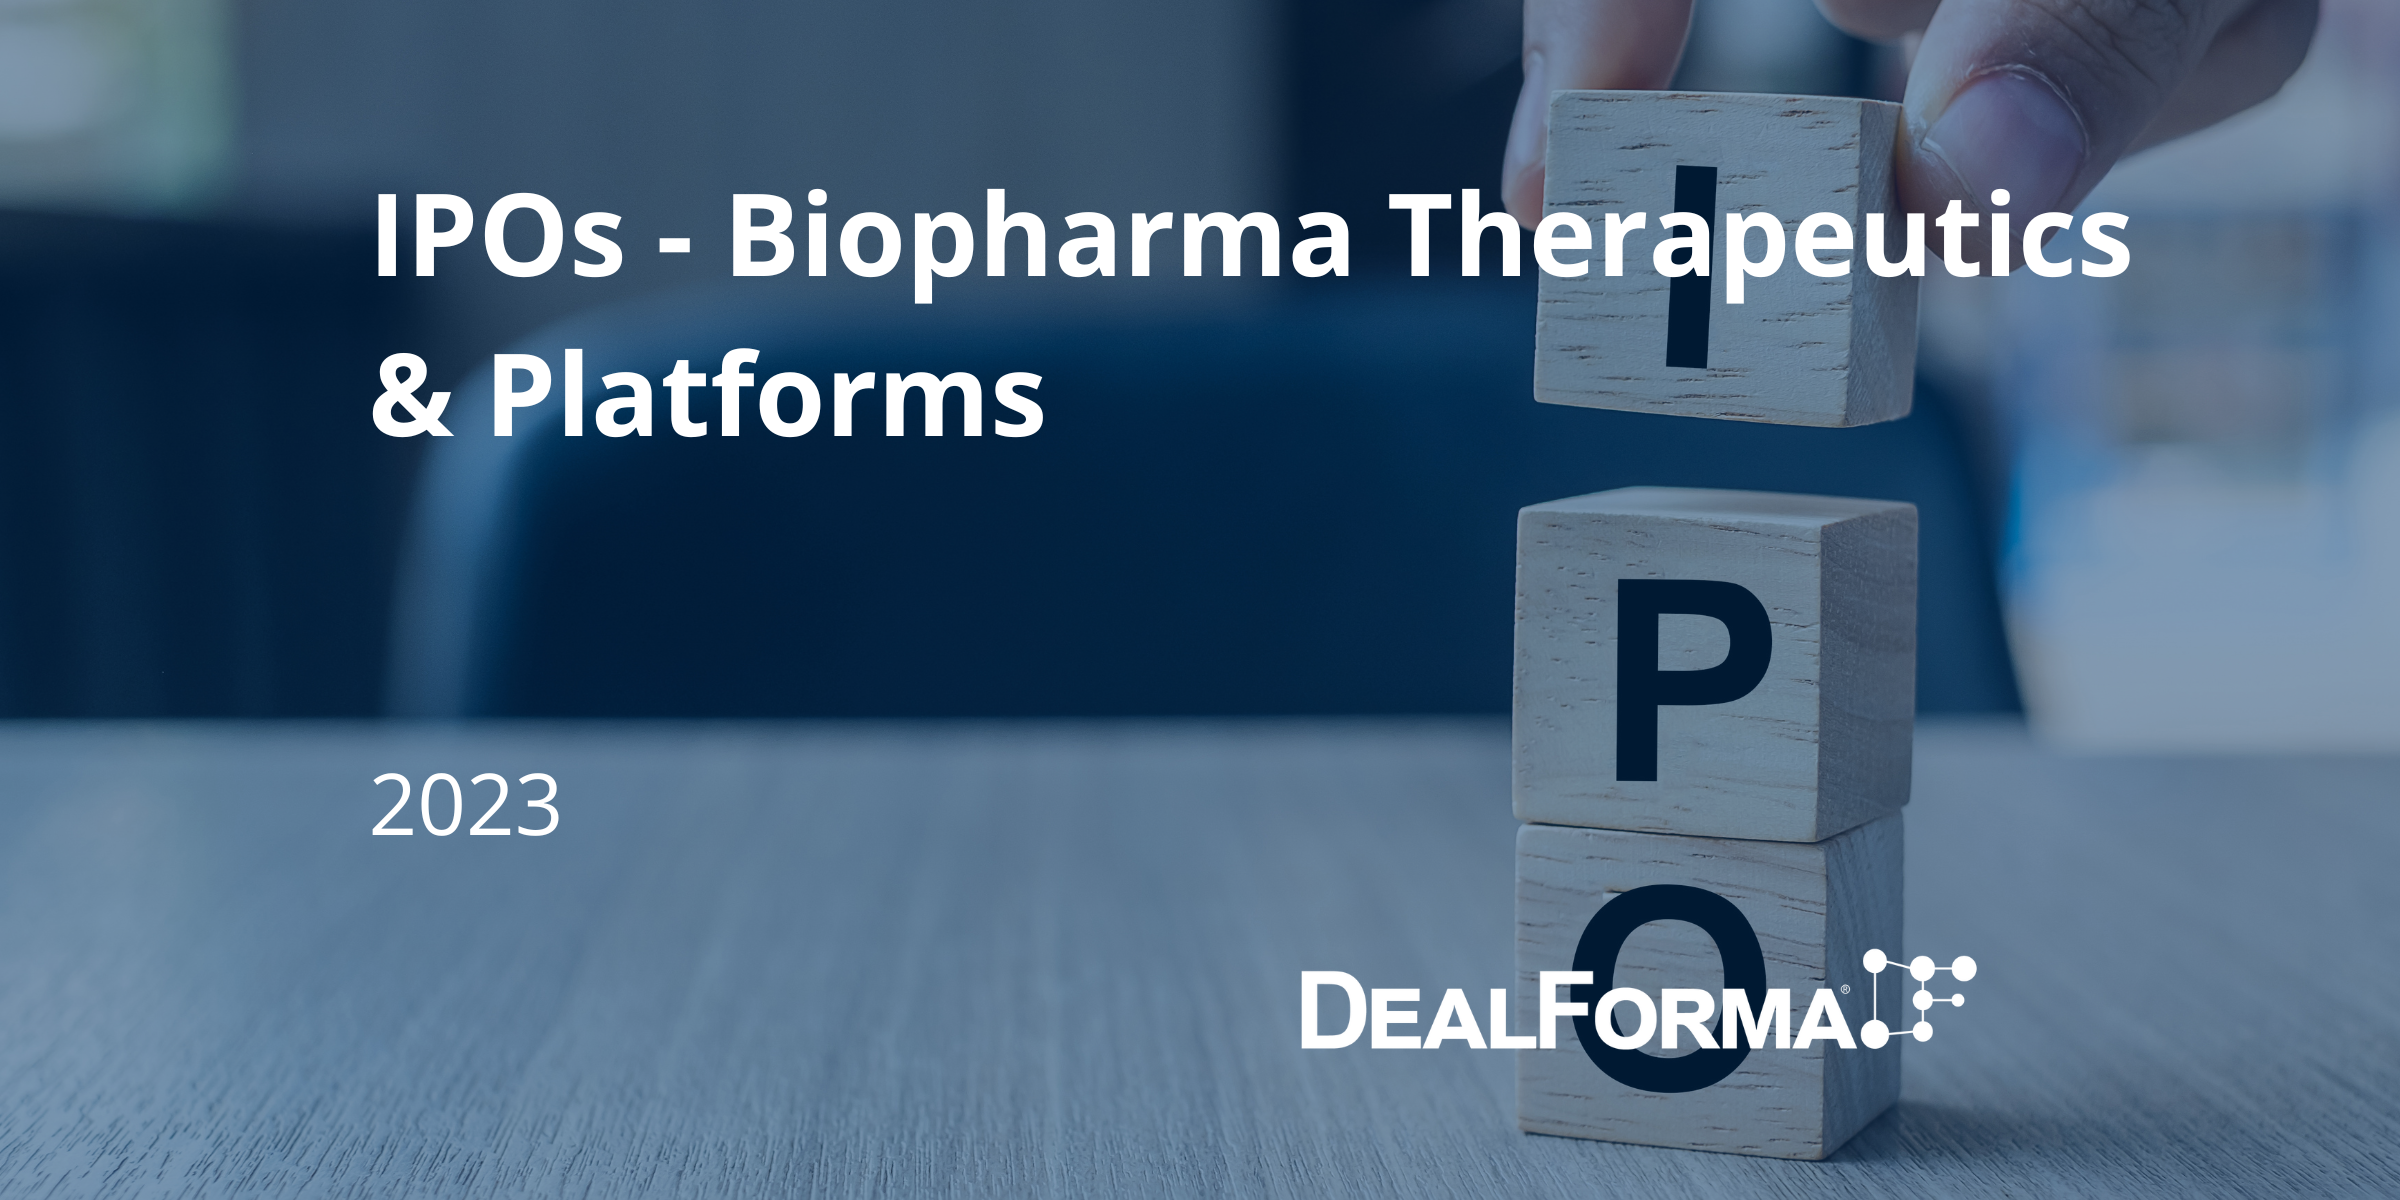 IPOs - Biopharma Therapeutics & Platforms – 2023